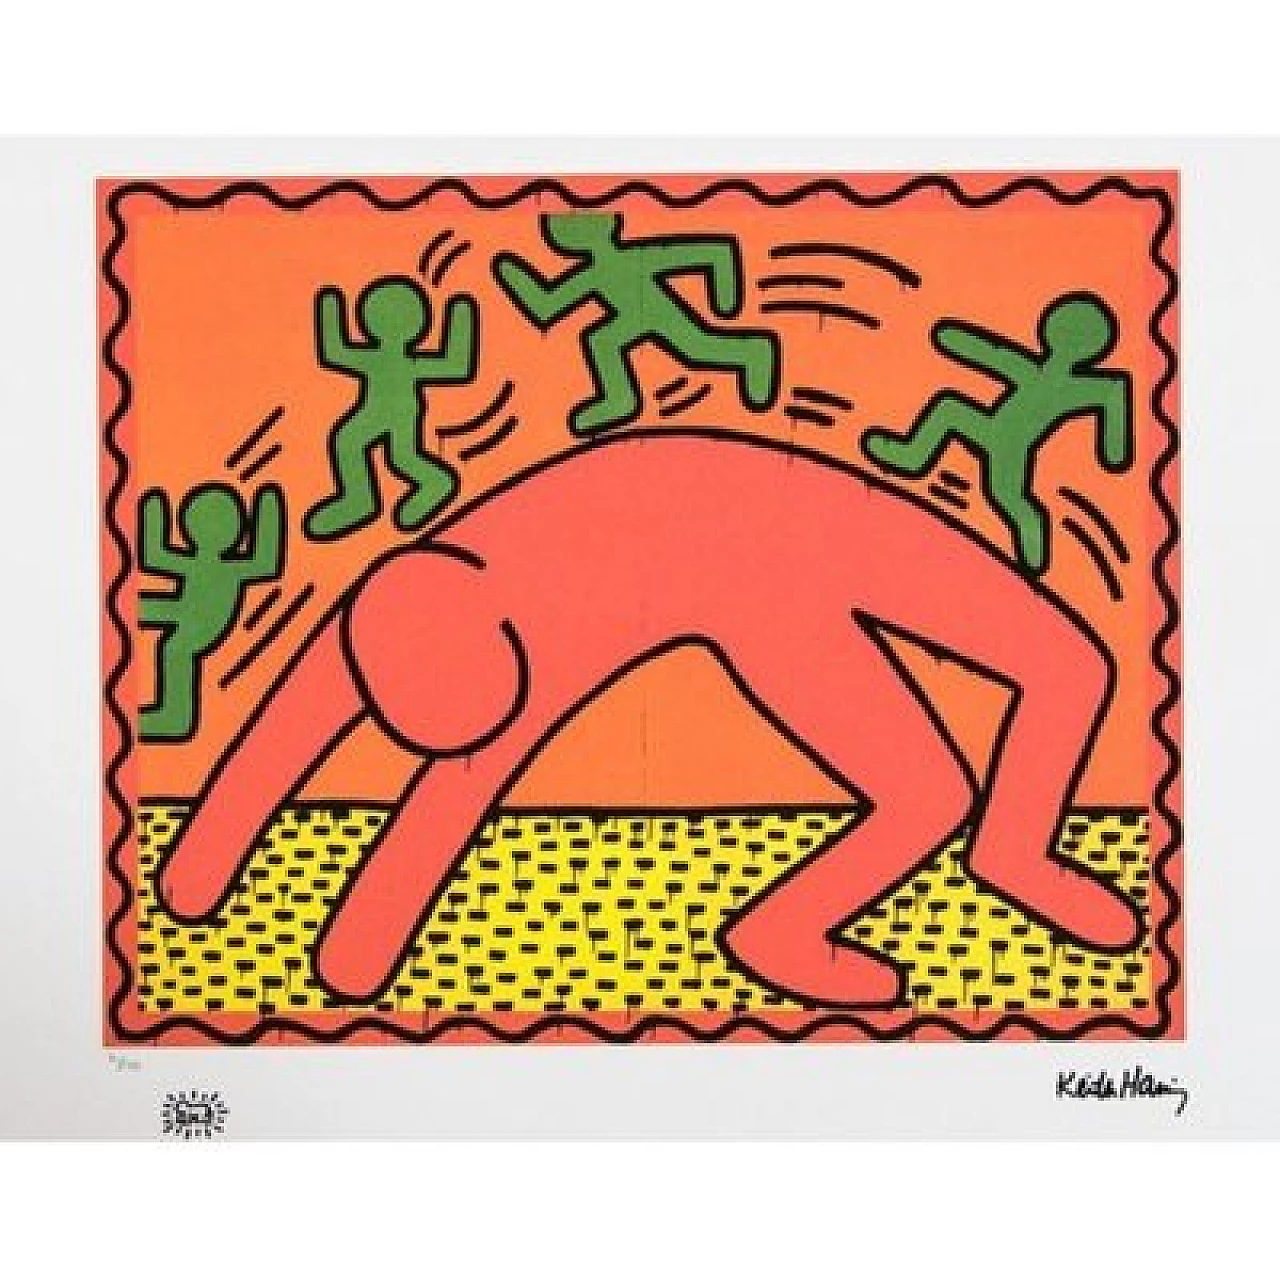 Keith Haring, Untitled, silkscreen print, 1980s 1